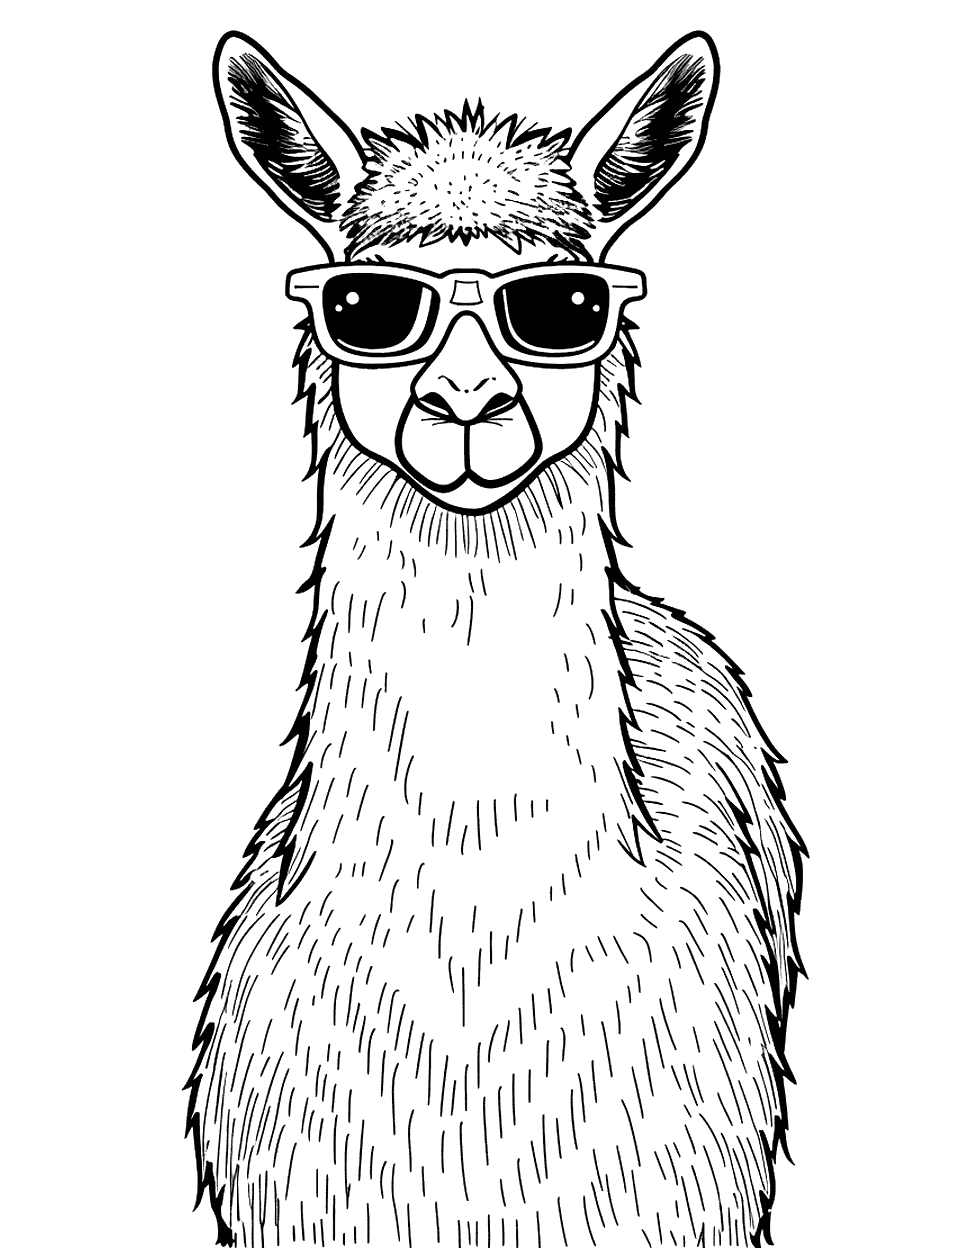 Llama Wearing Sunglasses Coloring Page - A cool llama sporting stylish sunglasses.